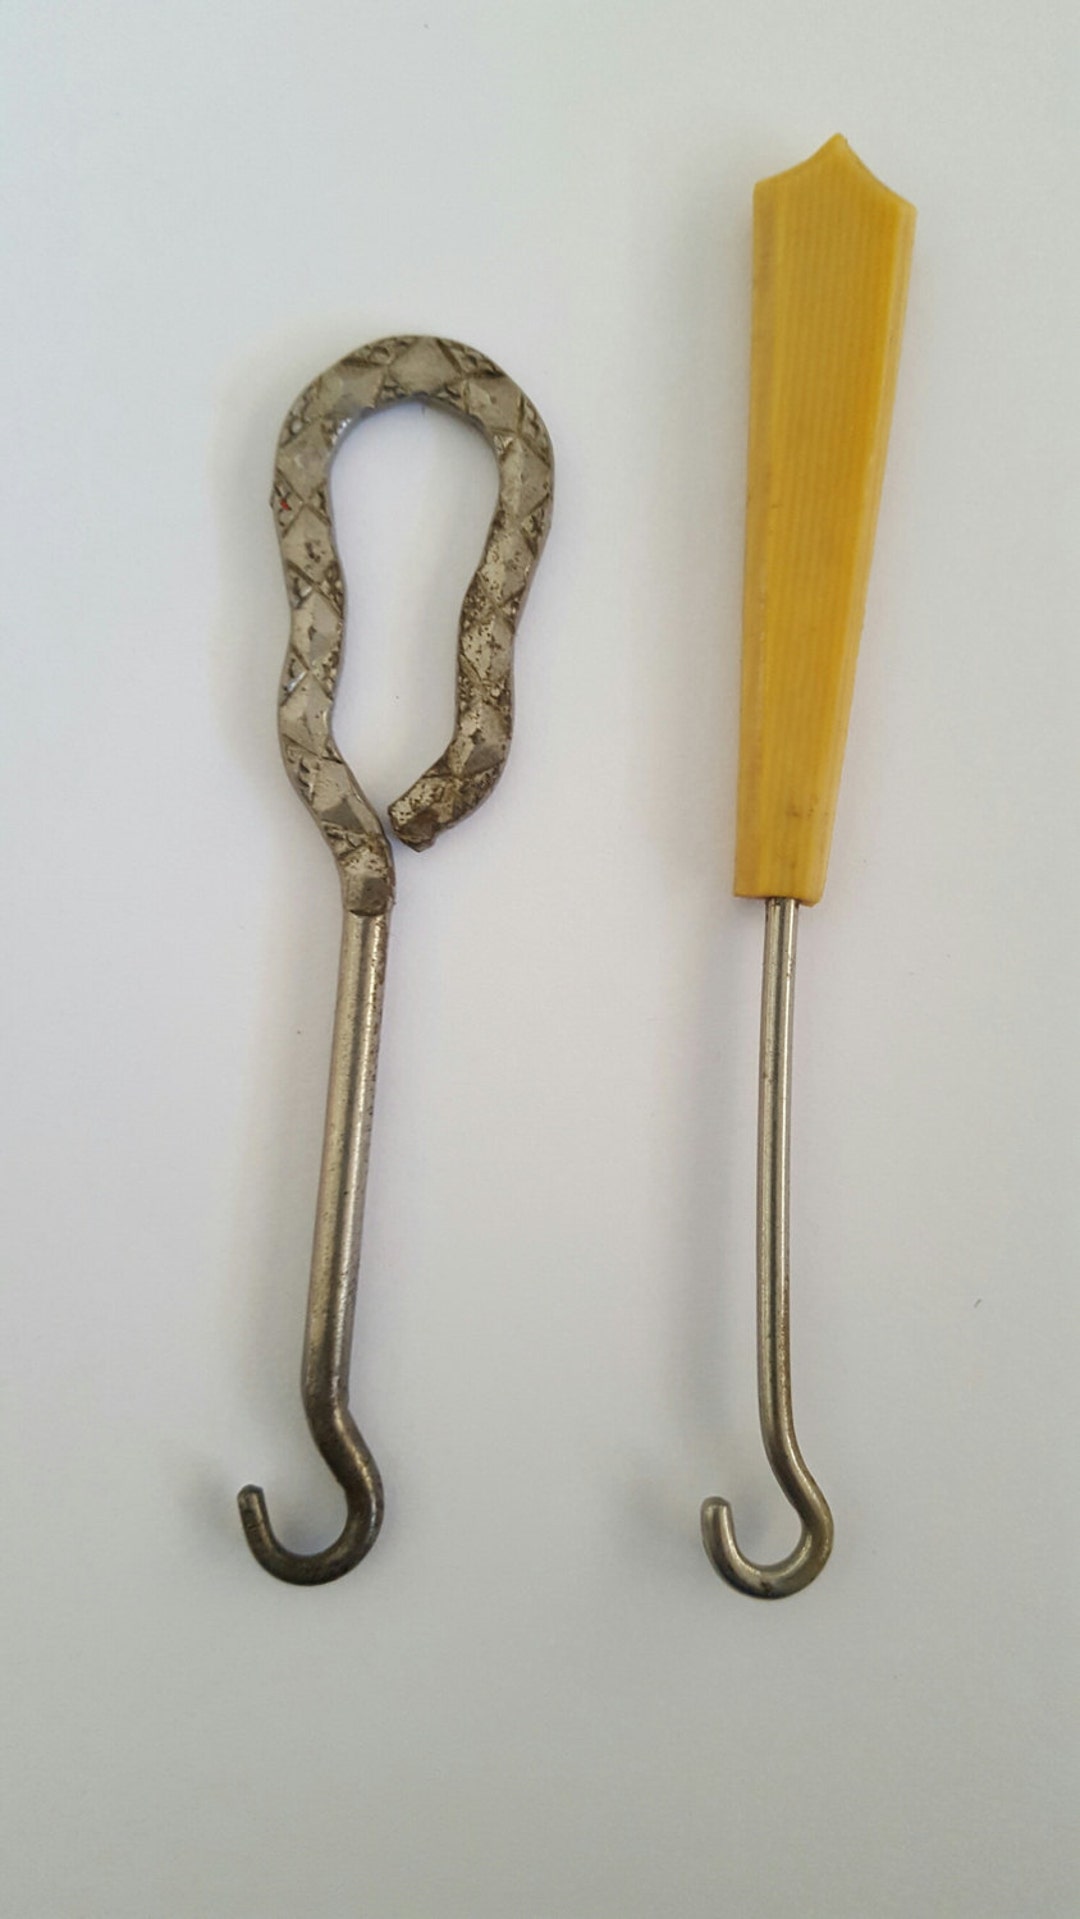 Antique Pair of Button Hooks, Metal Handle, Celluloid 1900-1919 